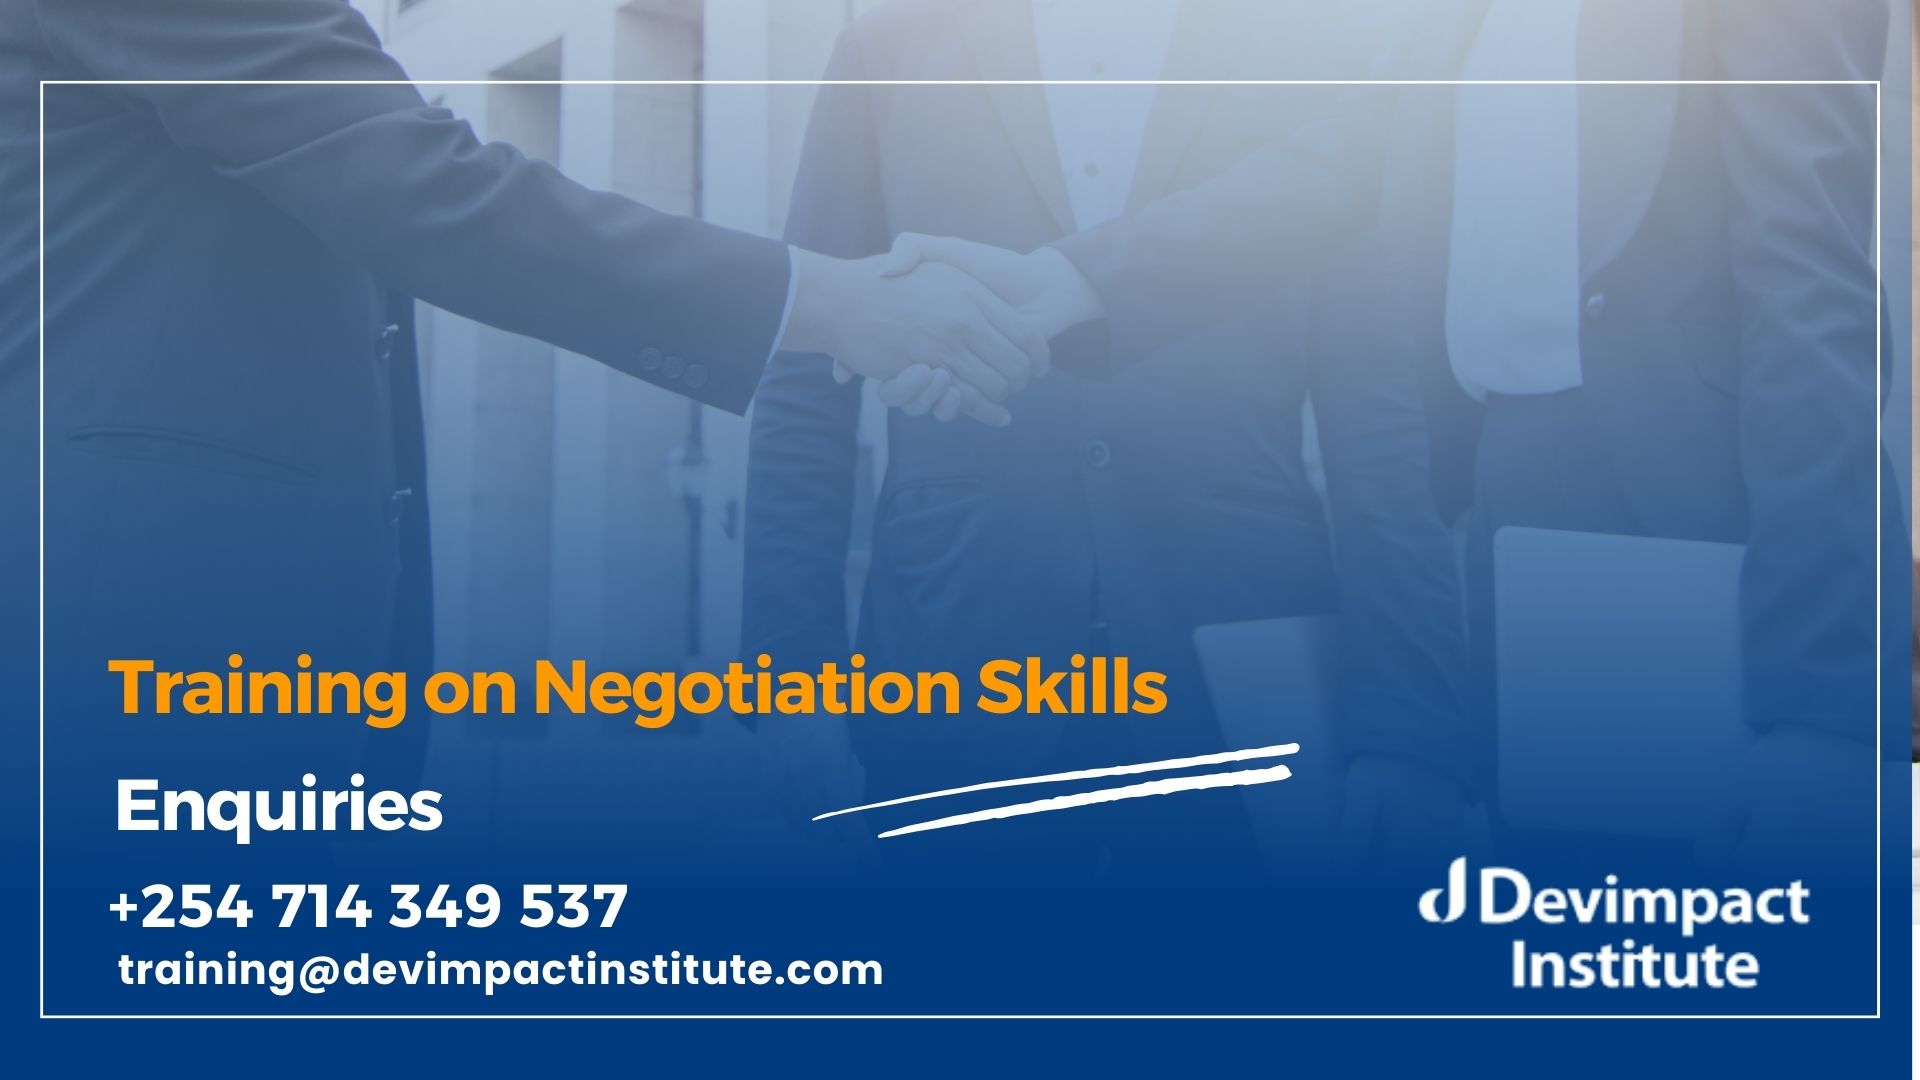 Training on Negotiation Skills, Devimpact Institute, Nairobi, Kenya